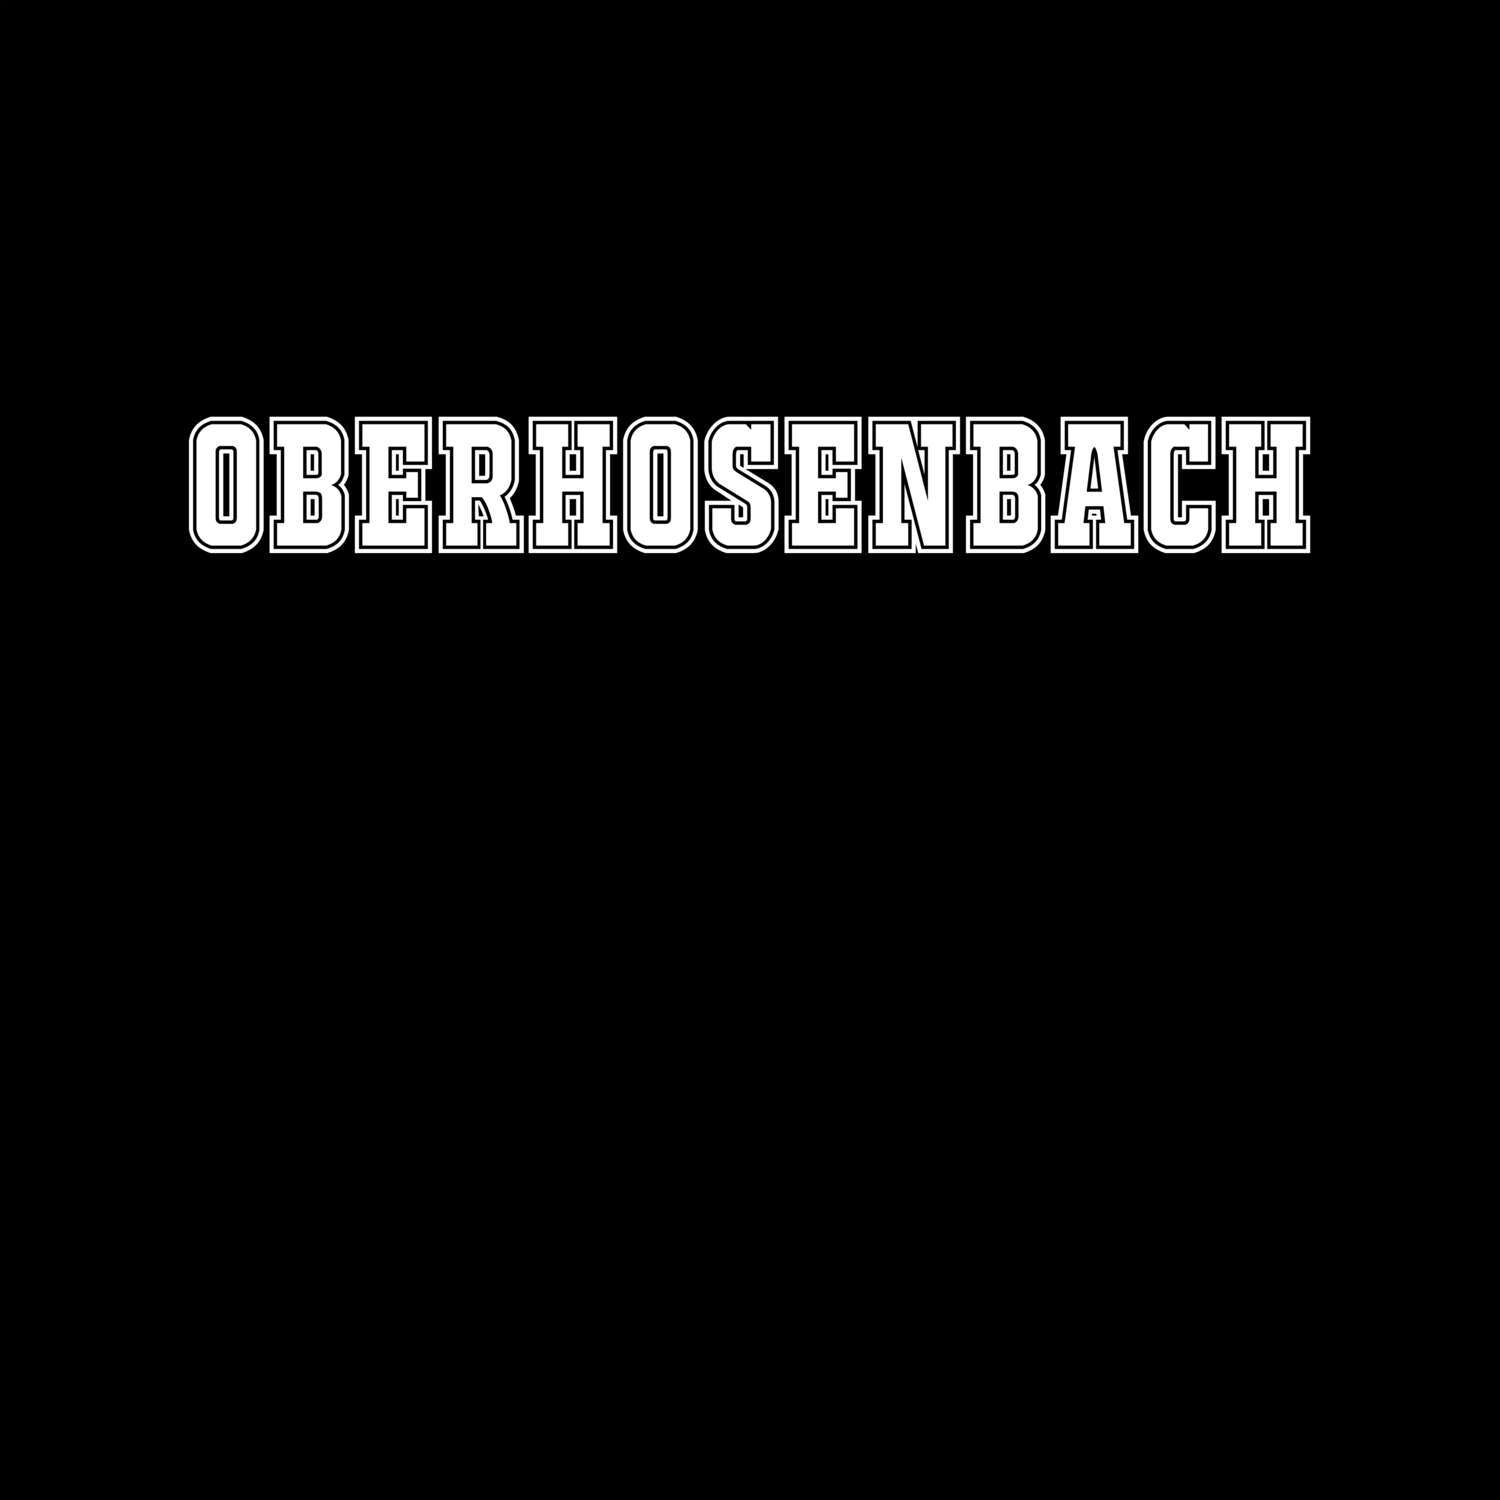 Oberhosenbach T-Shirt »Classic«